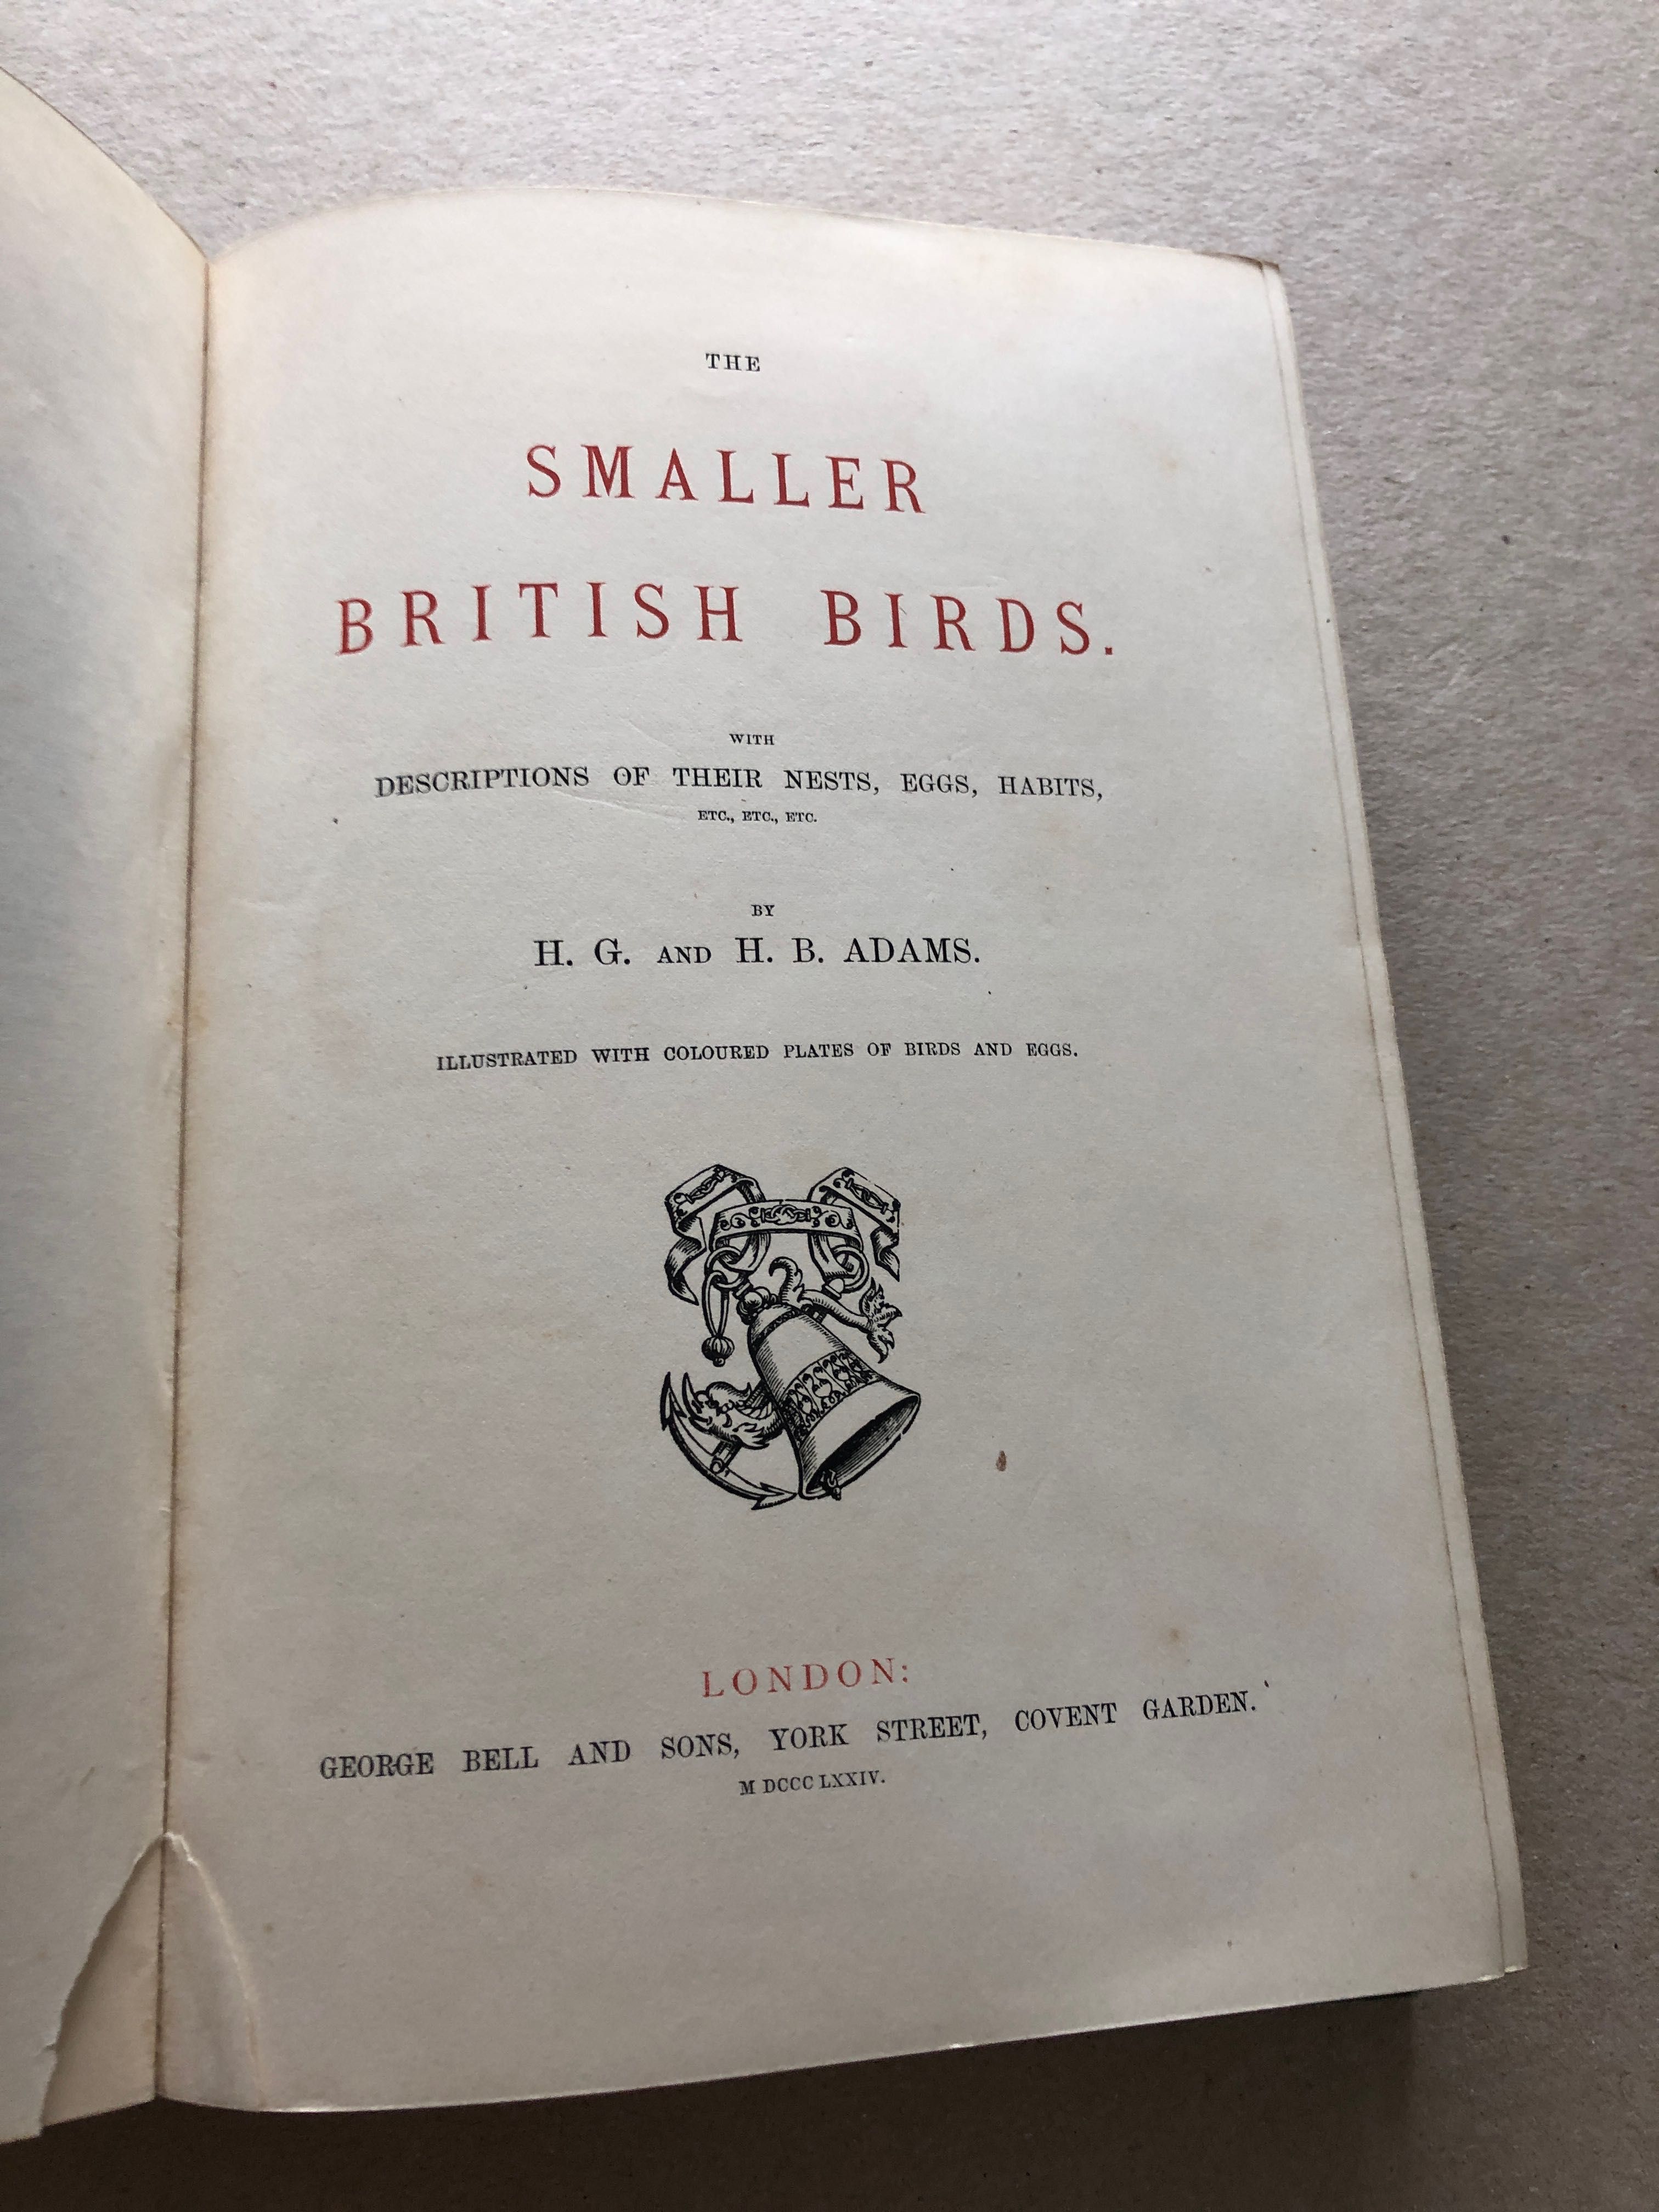 The Smaller British Birds.